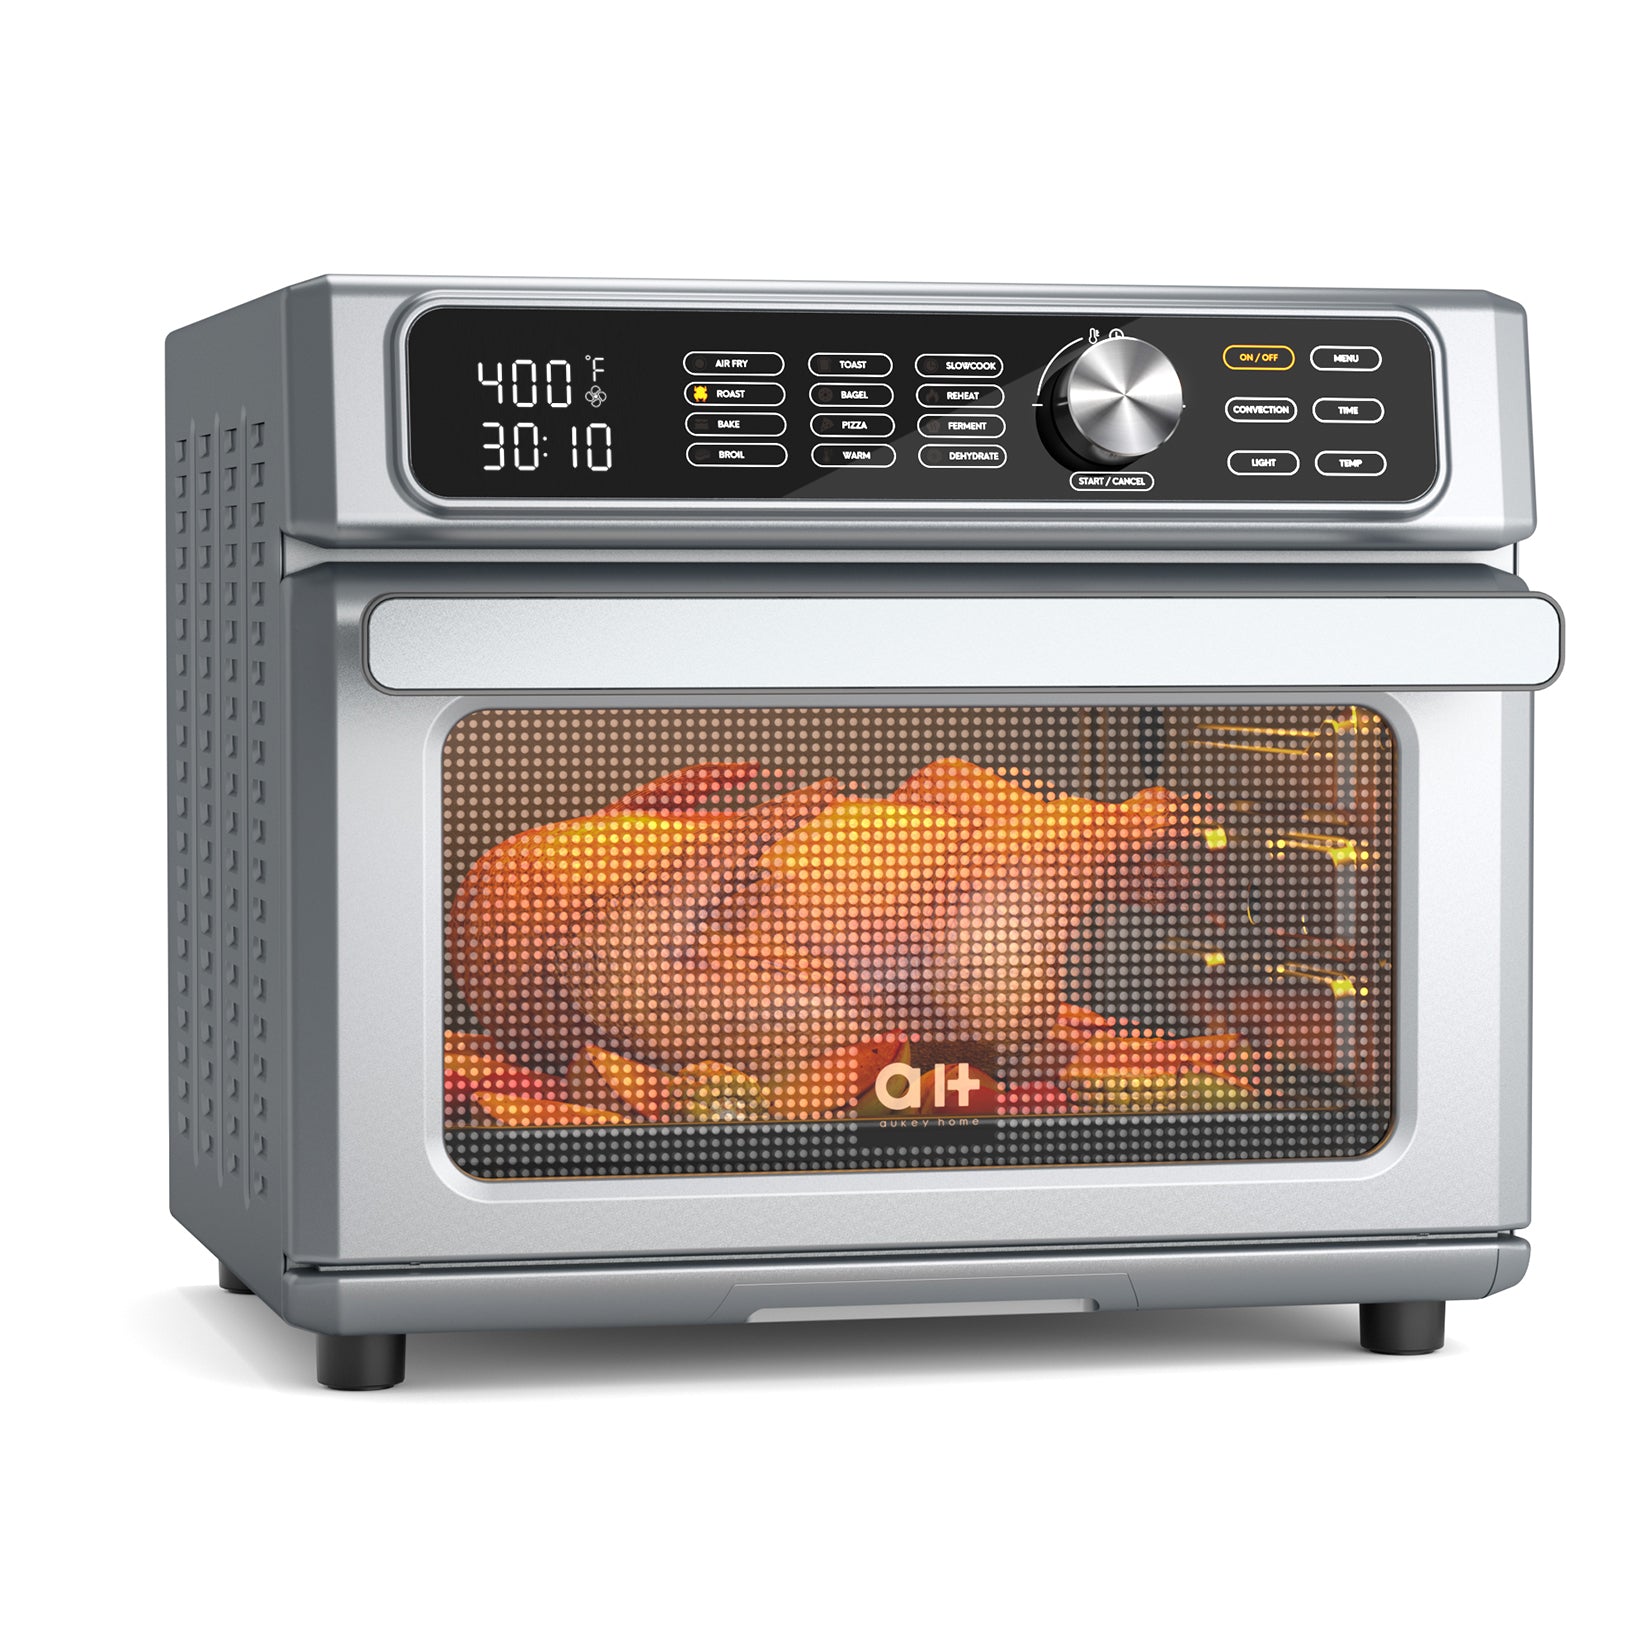 Chefman Toast Digital Air Fryer Oven - Stainless Steel